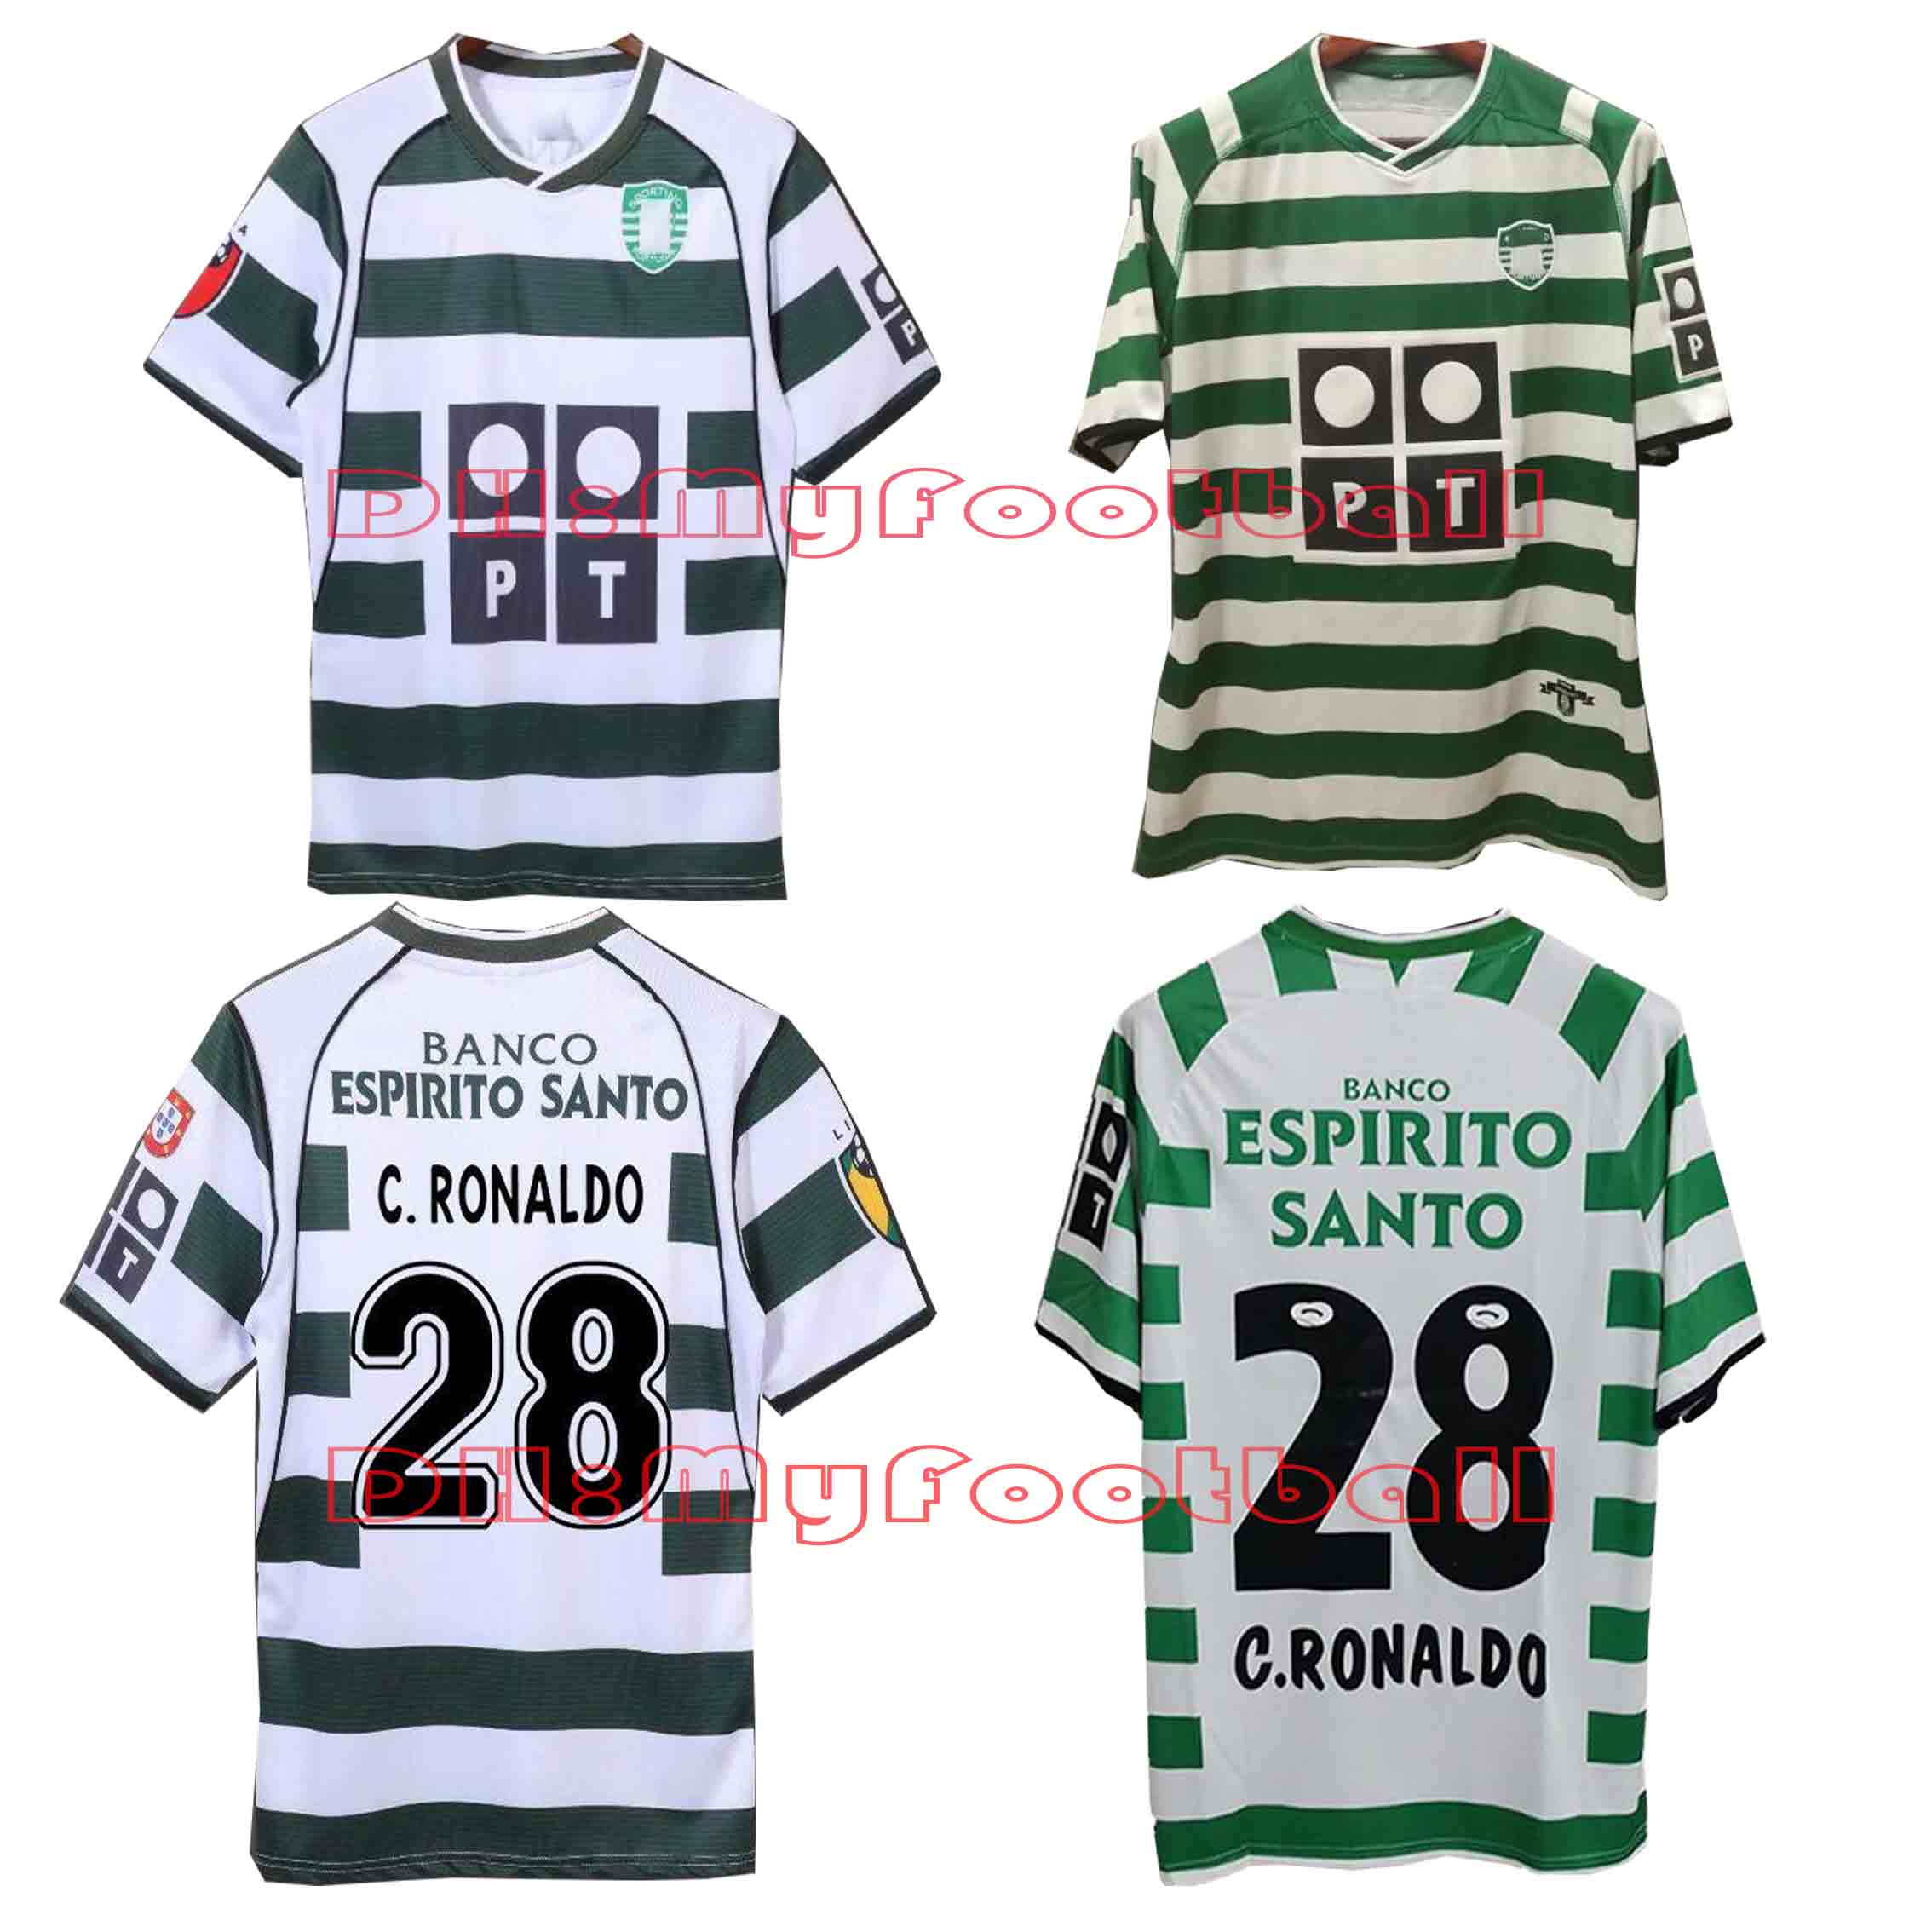 

Ronaldo Sporting CP 01 02 03 04 Lisboa retro soccer jerseys Marius Niculae Joao Pinto 2001 2002 2003 2004 Lisbon Classic Vintage football shirts, Black